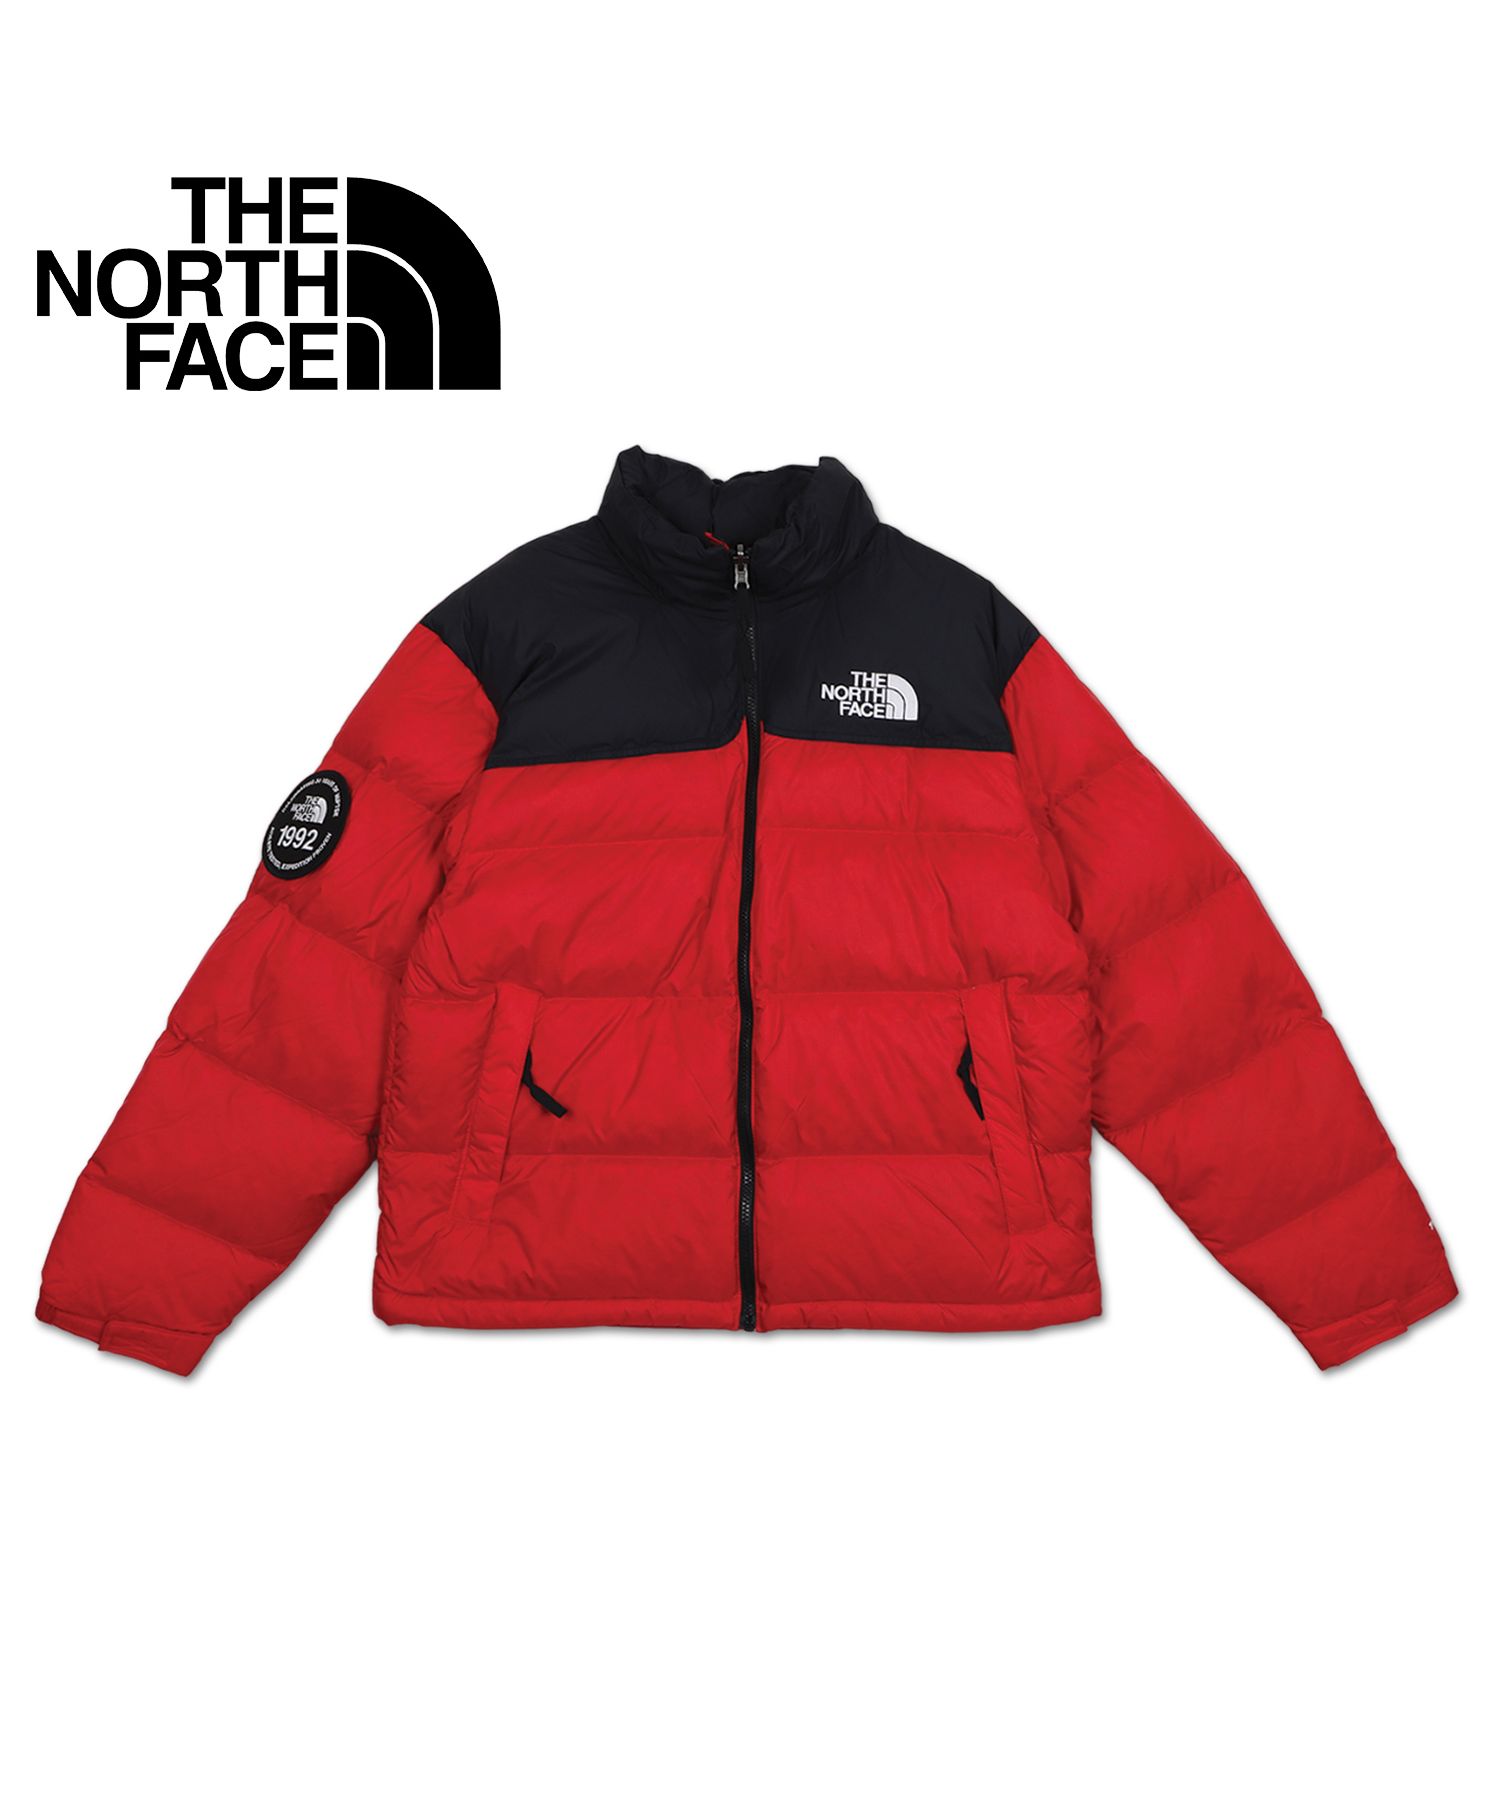 The North face nuptse jacket down M 1992